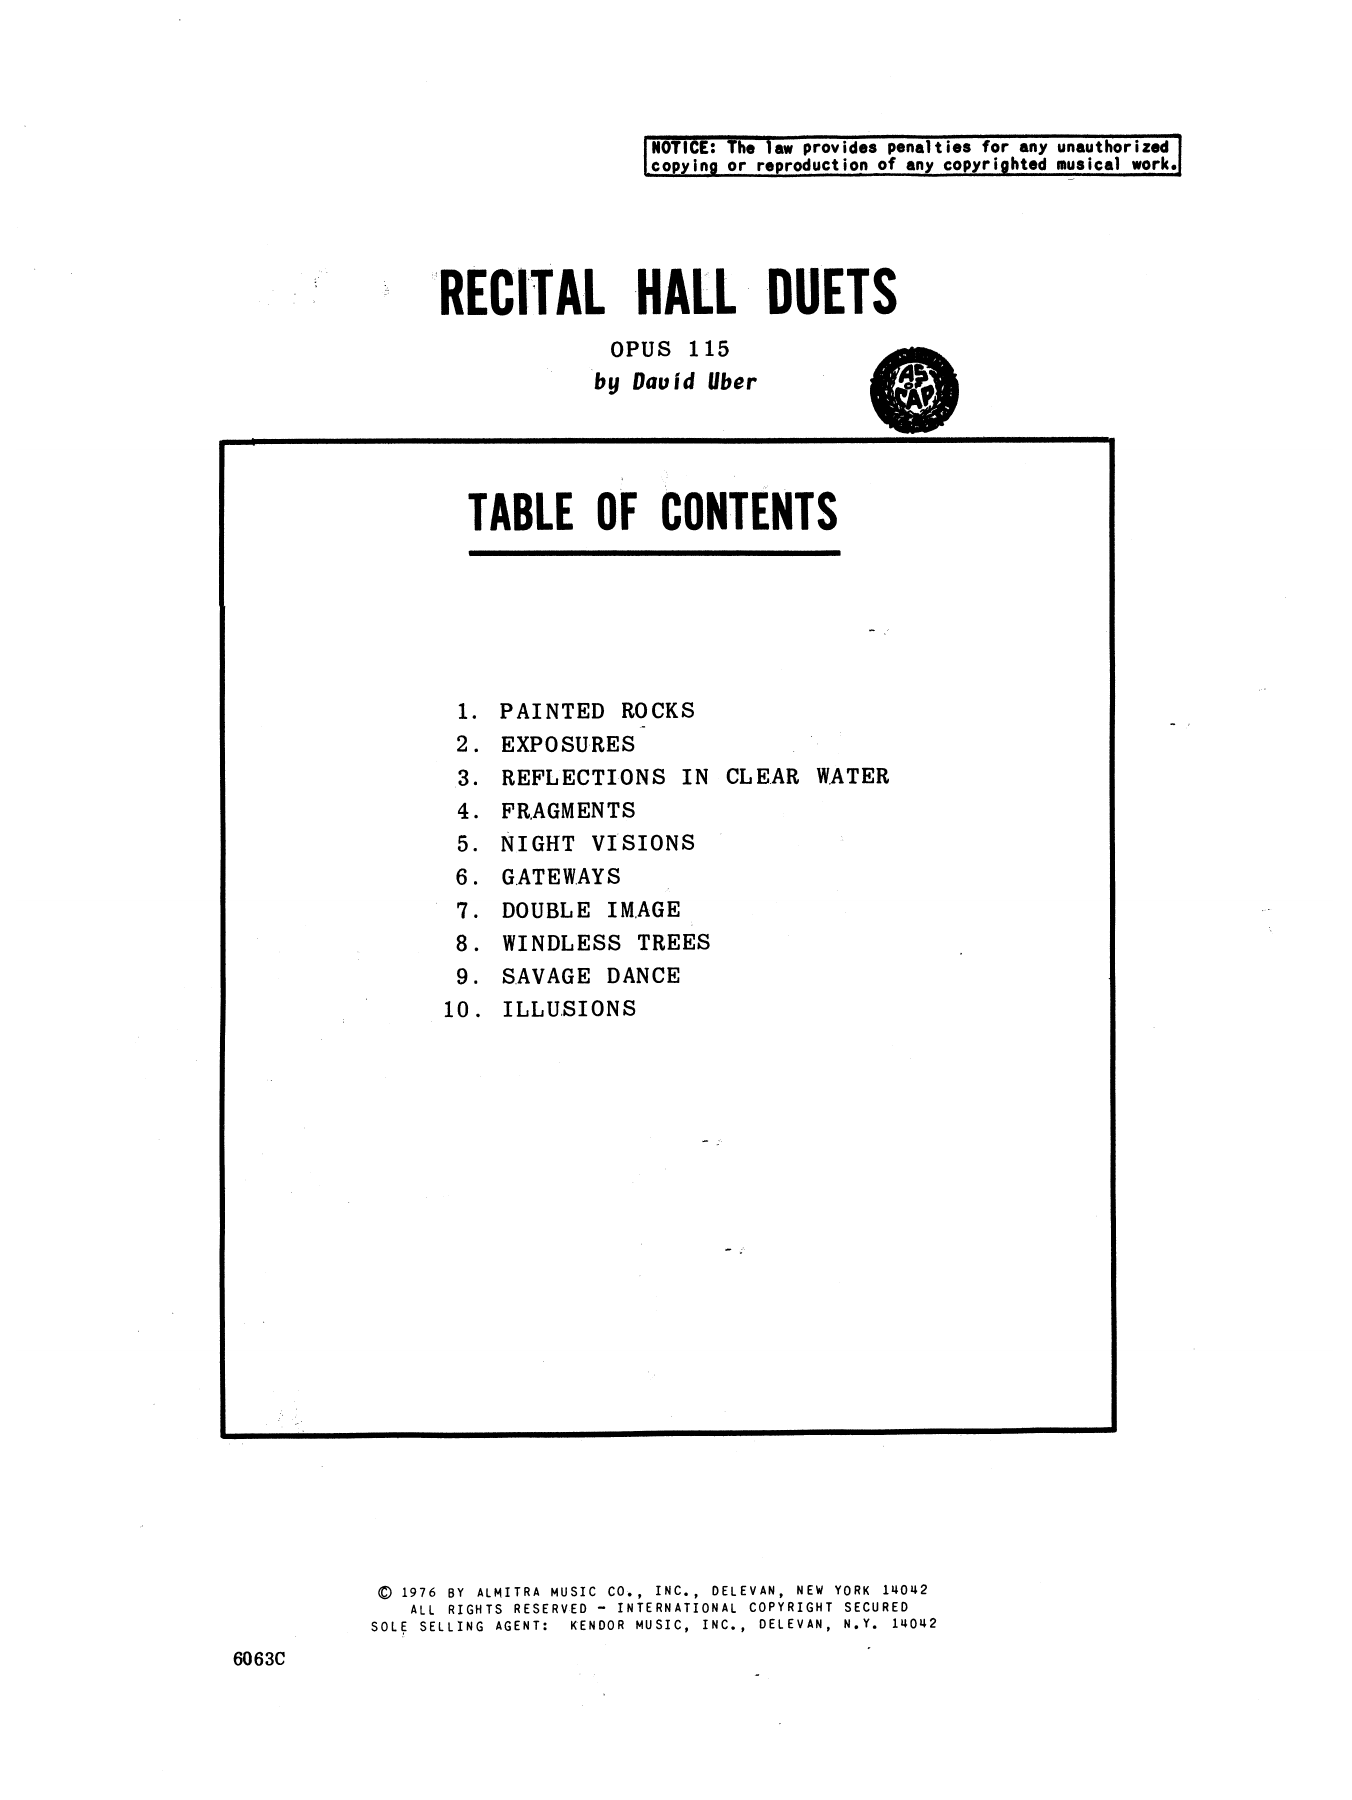 Download David Uber Recital Hall Duets Sheet Music